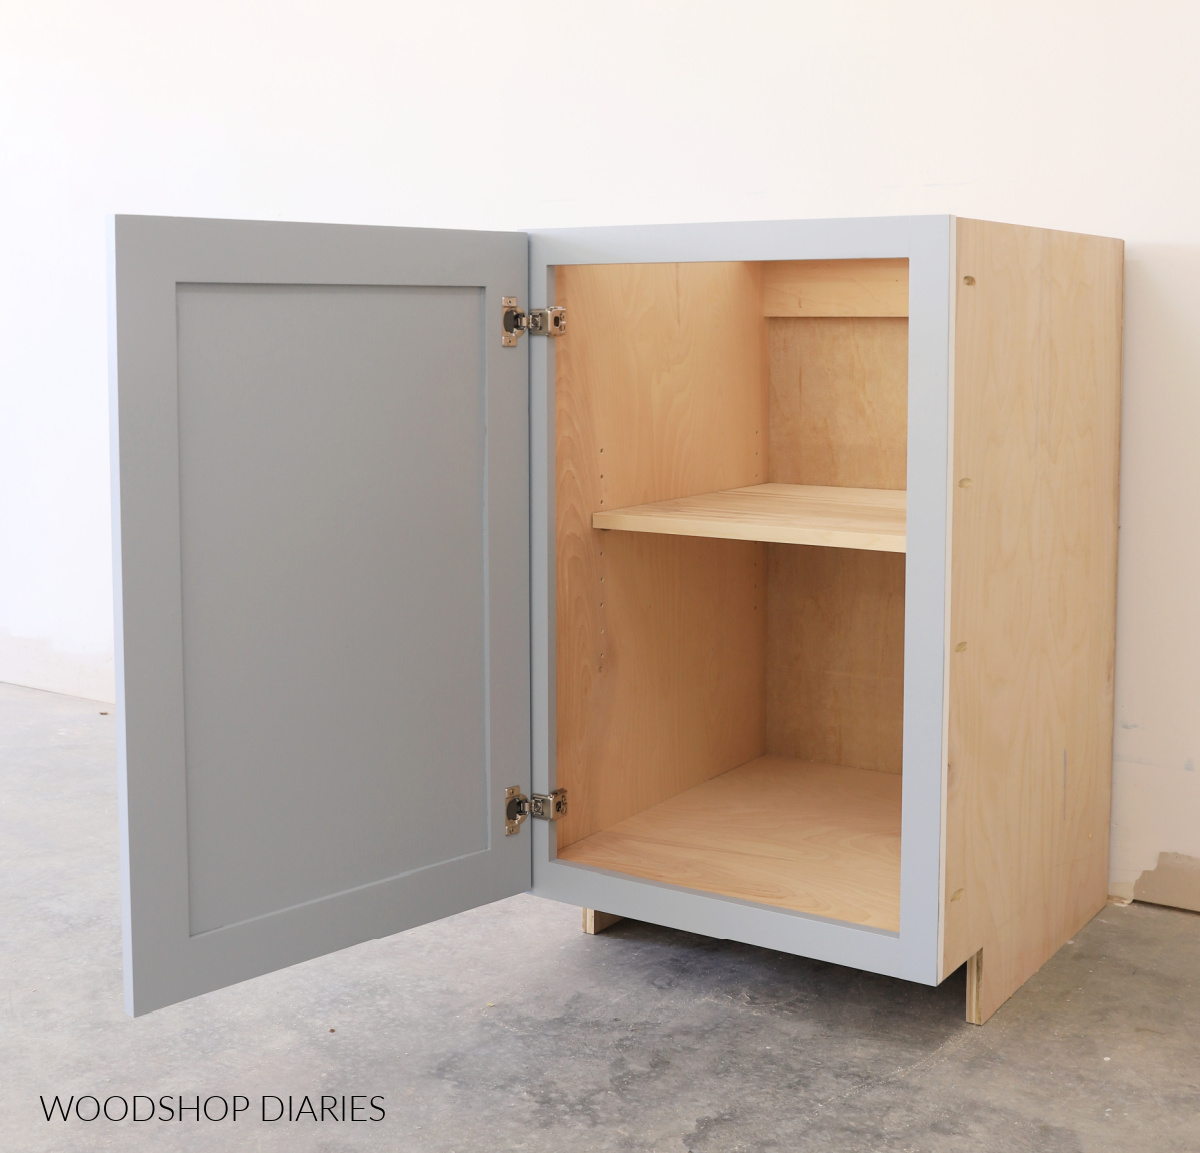 Simple base cabinet with shaker style door open revealing adjustable shelf inside